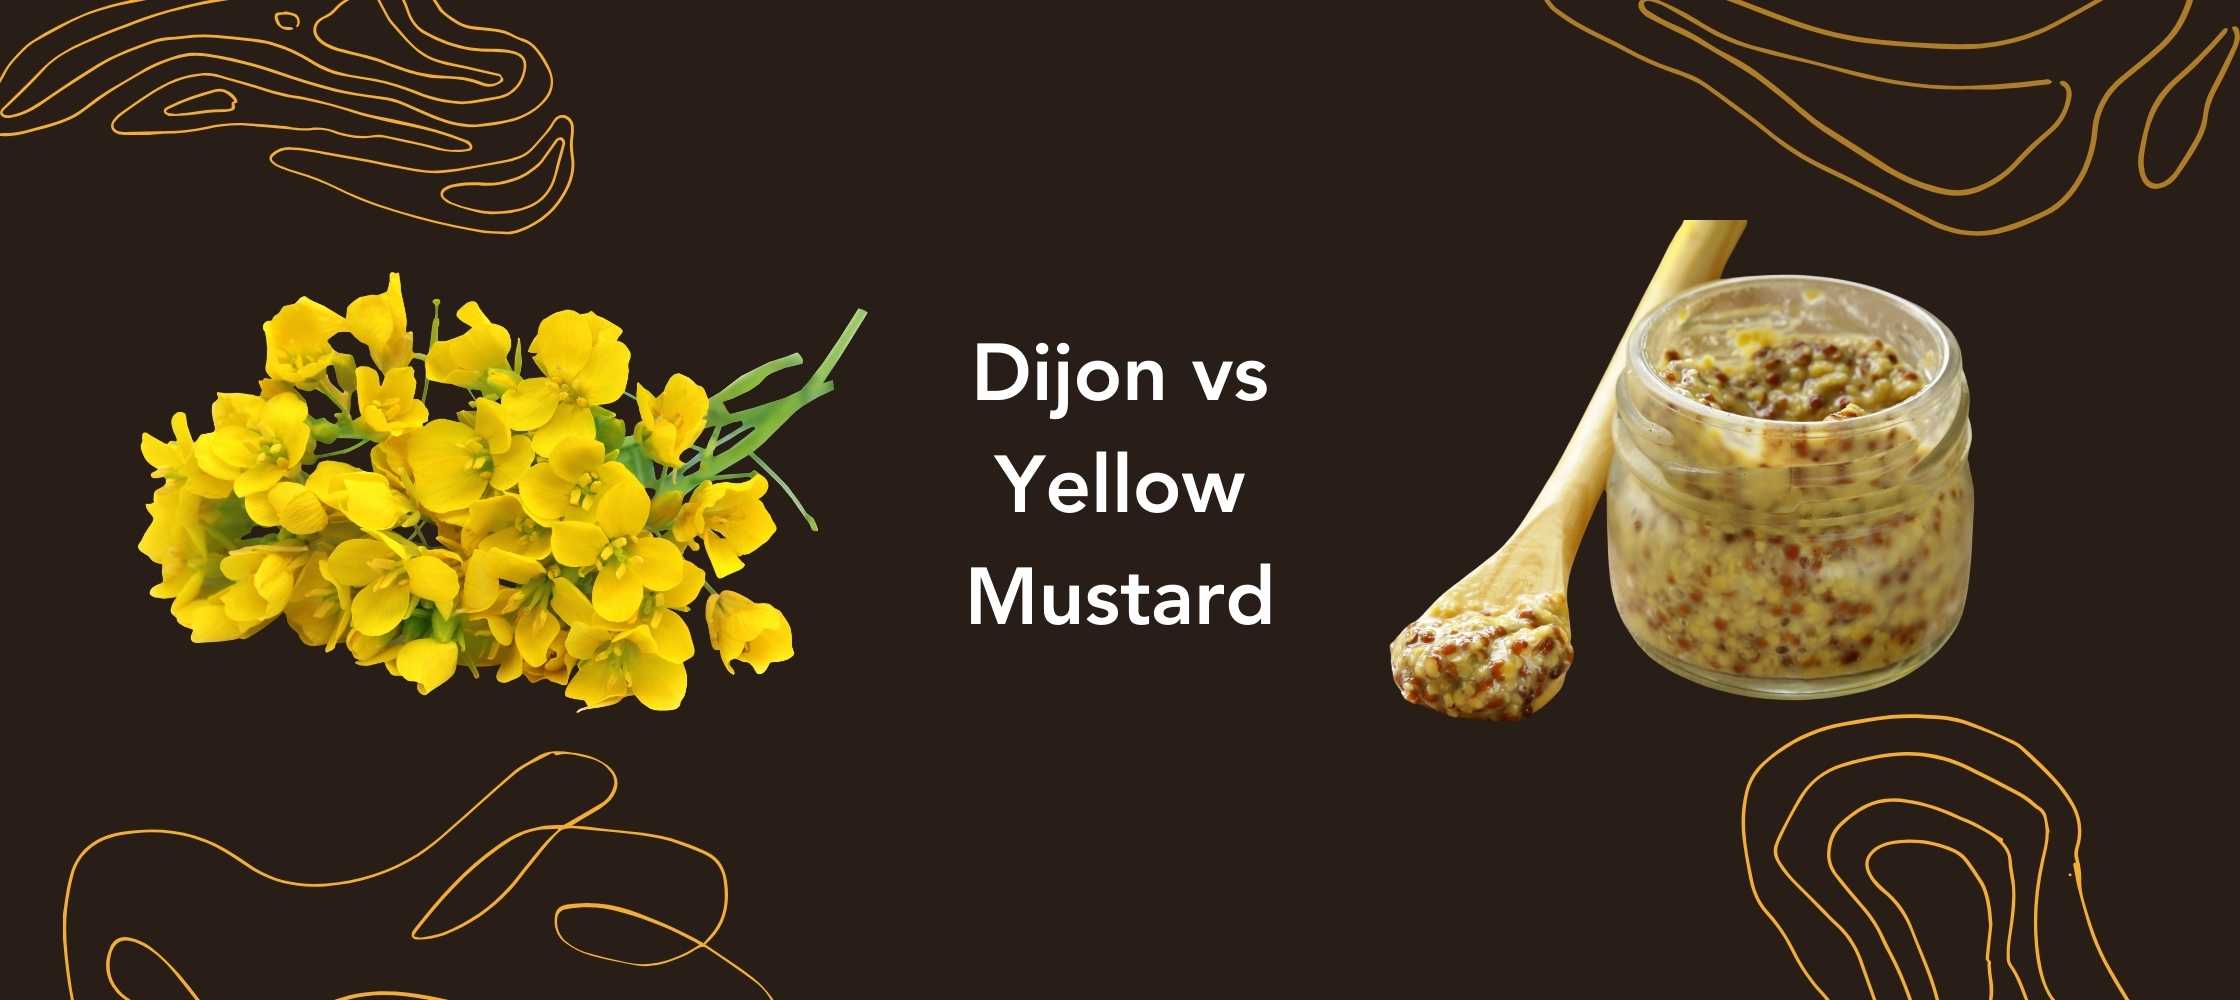 Dijon vs Yellow Mustard